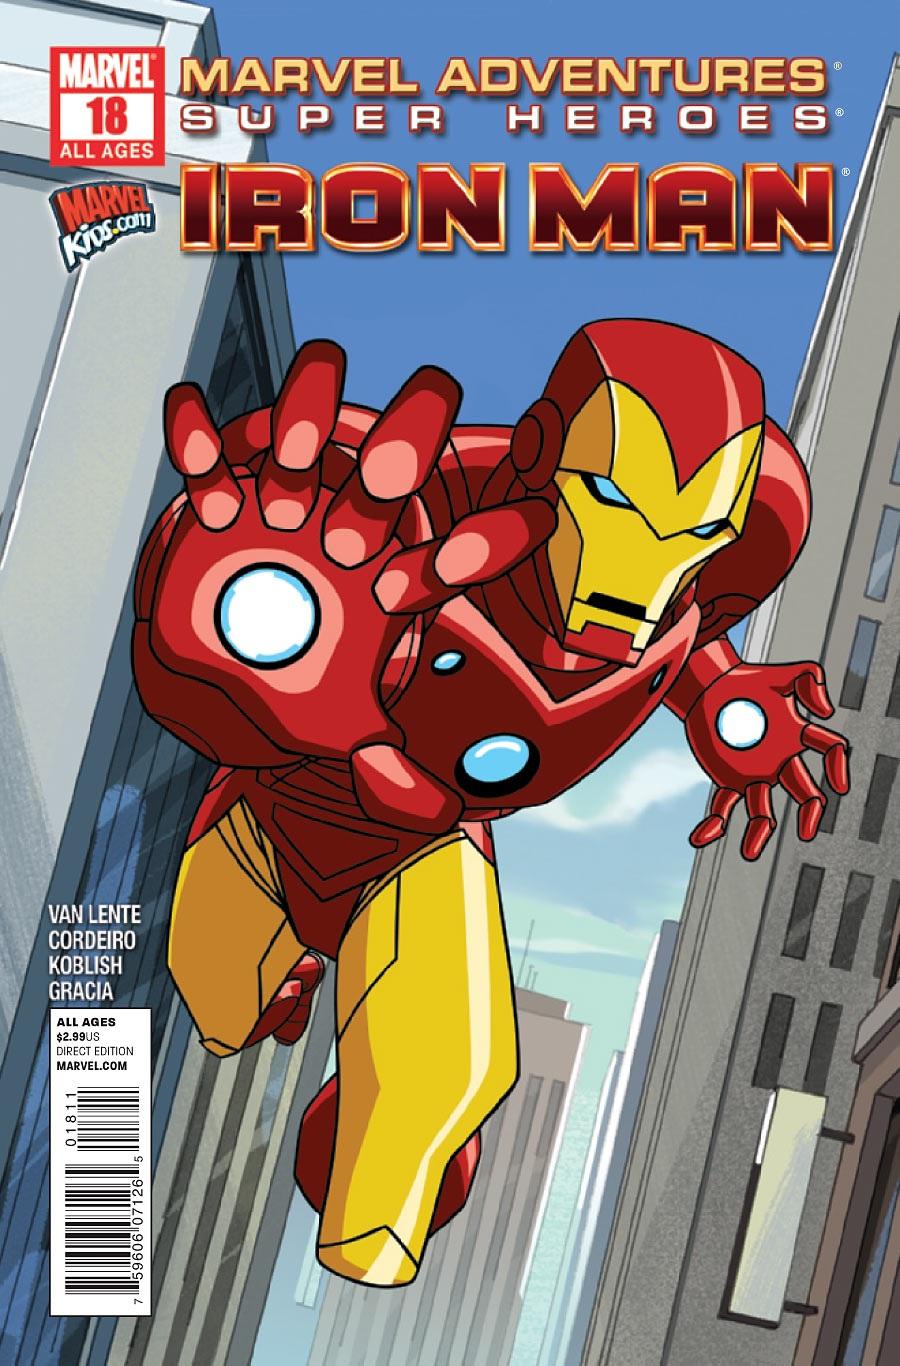 Marvel Adventures: Super Heroes Vol. 2 #18